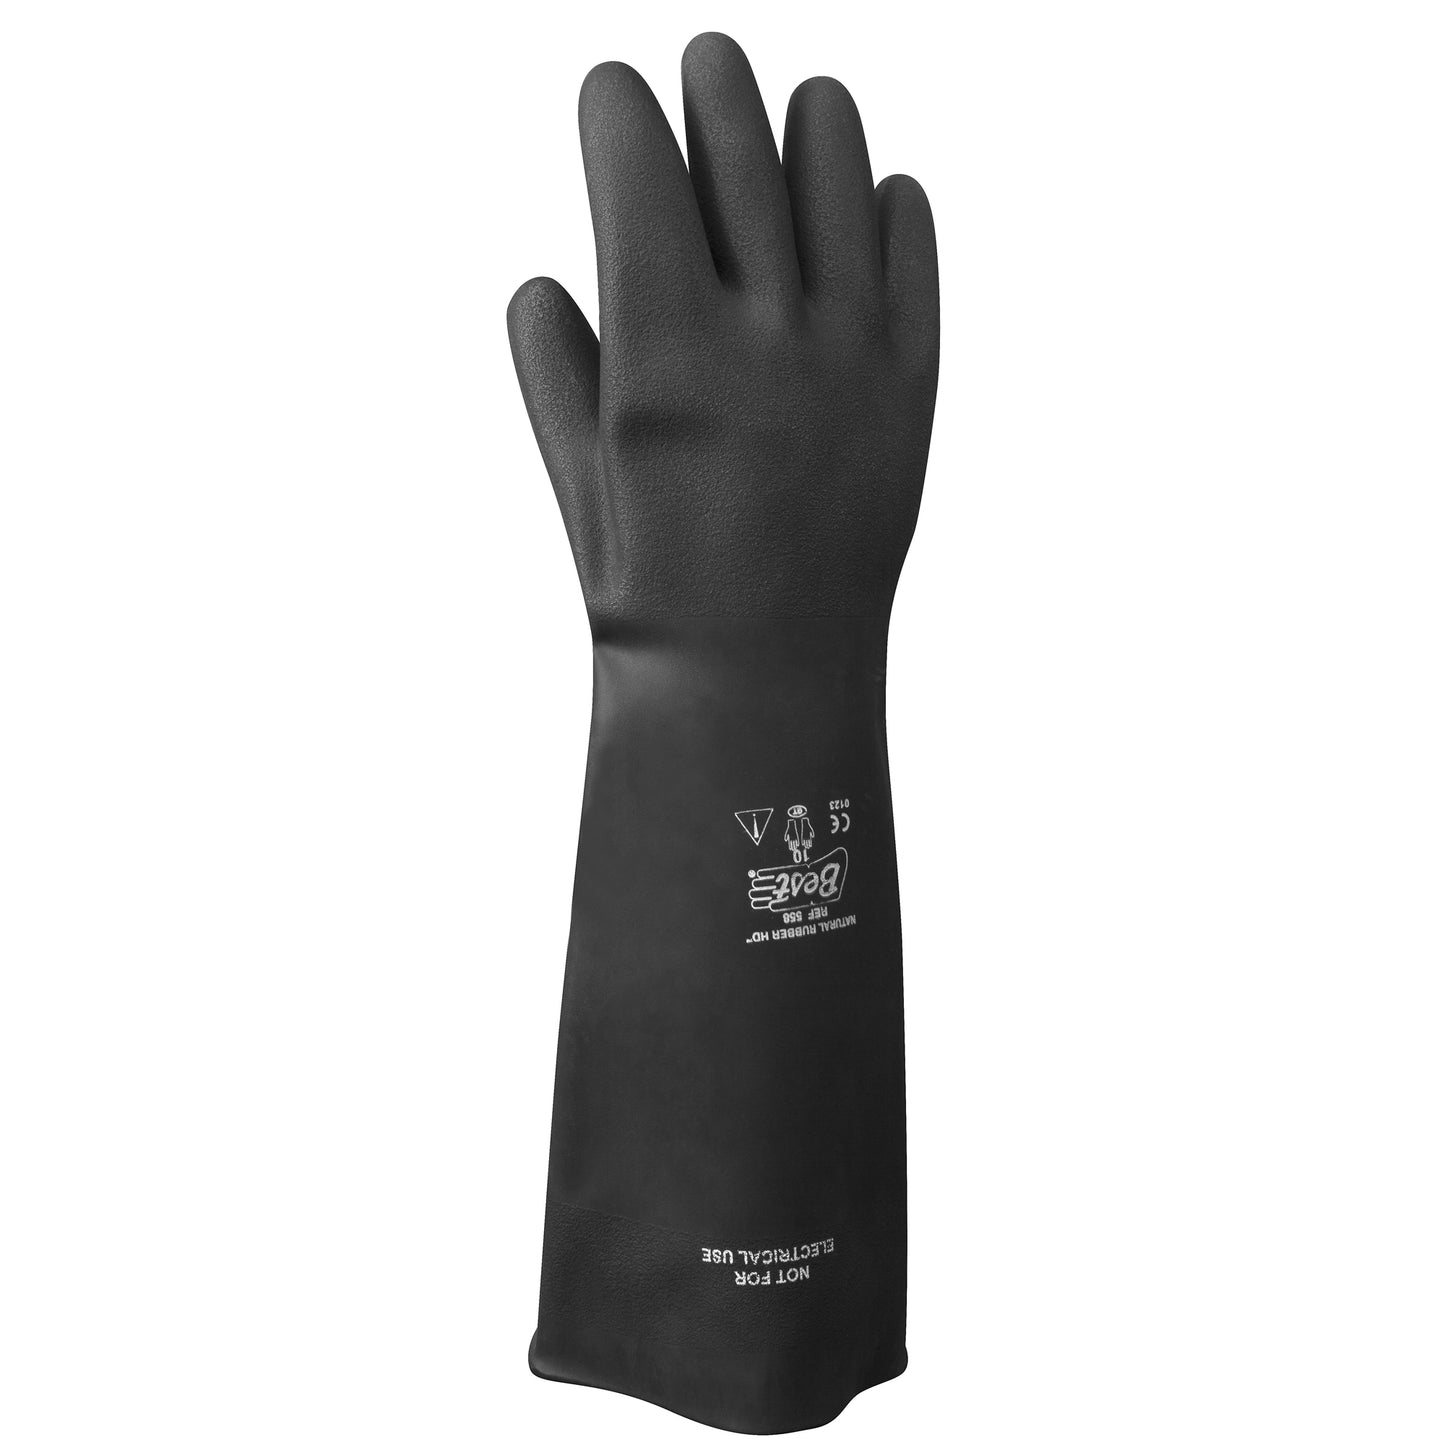 HD SHOWA 558 18" Latex Rubber Gloves, 40-mil SFU998 